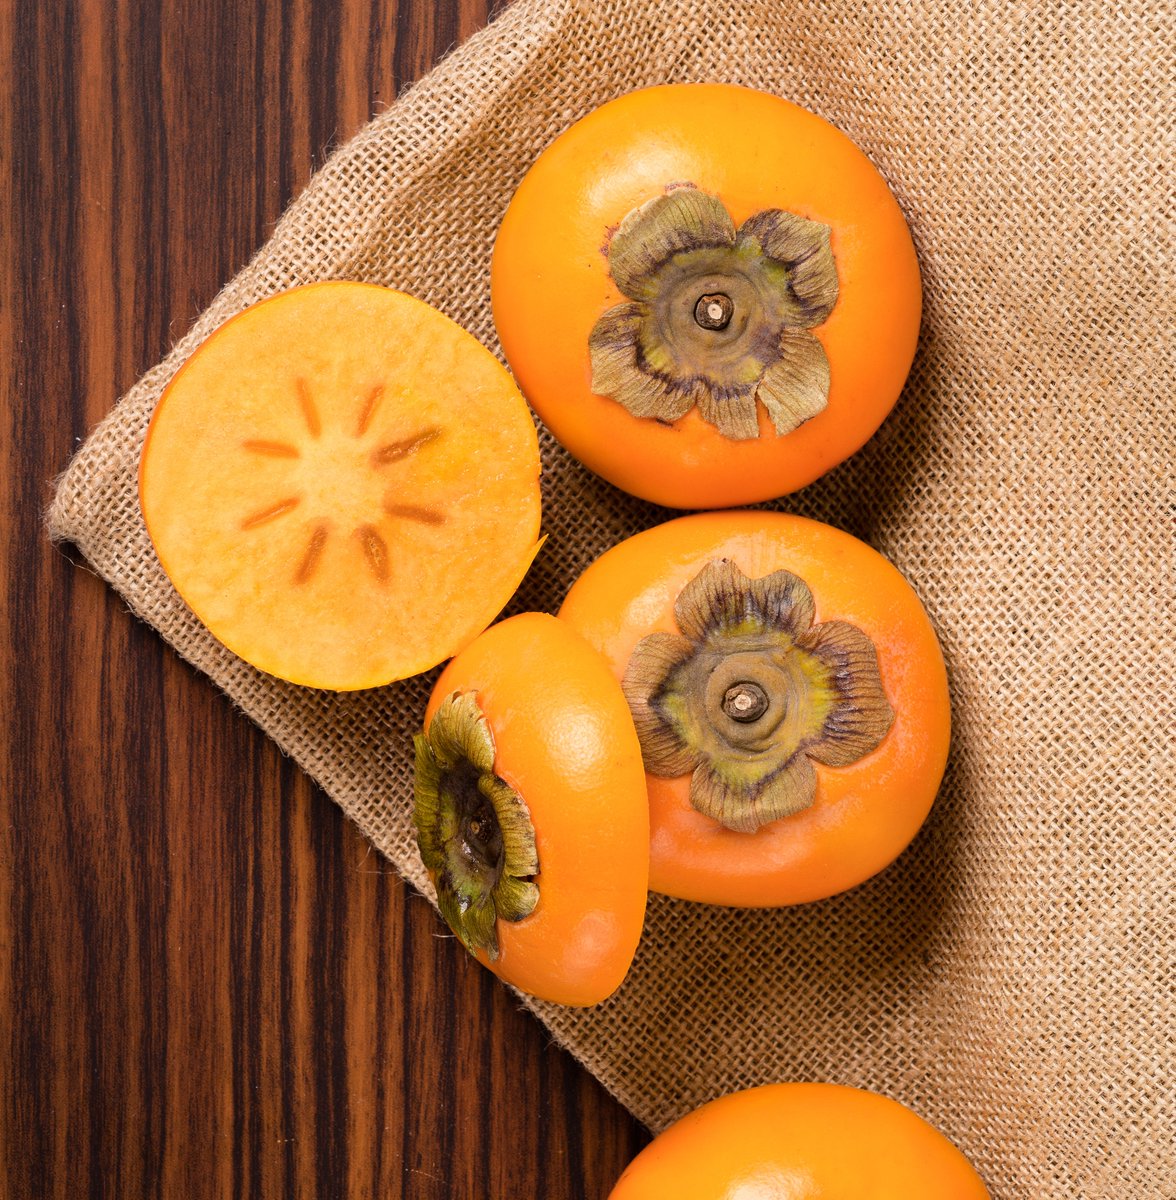 Persimmons!
One Fuyu, one Fu-Me : ) 
 
#persimmons #fallfruit #produce #californiapersimmons
#Californiafruit #local #eatlocal #farmtoform #colusa